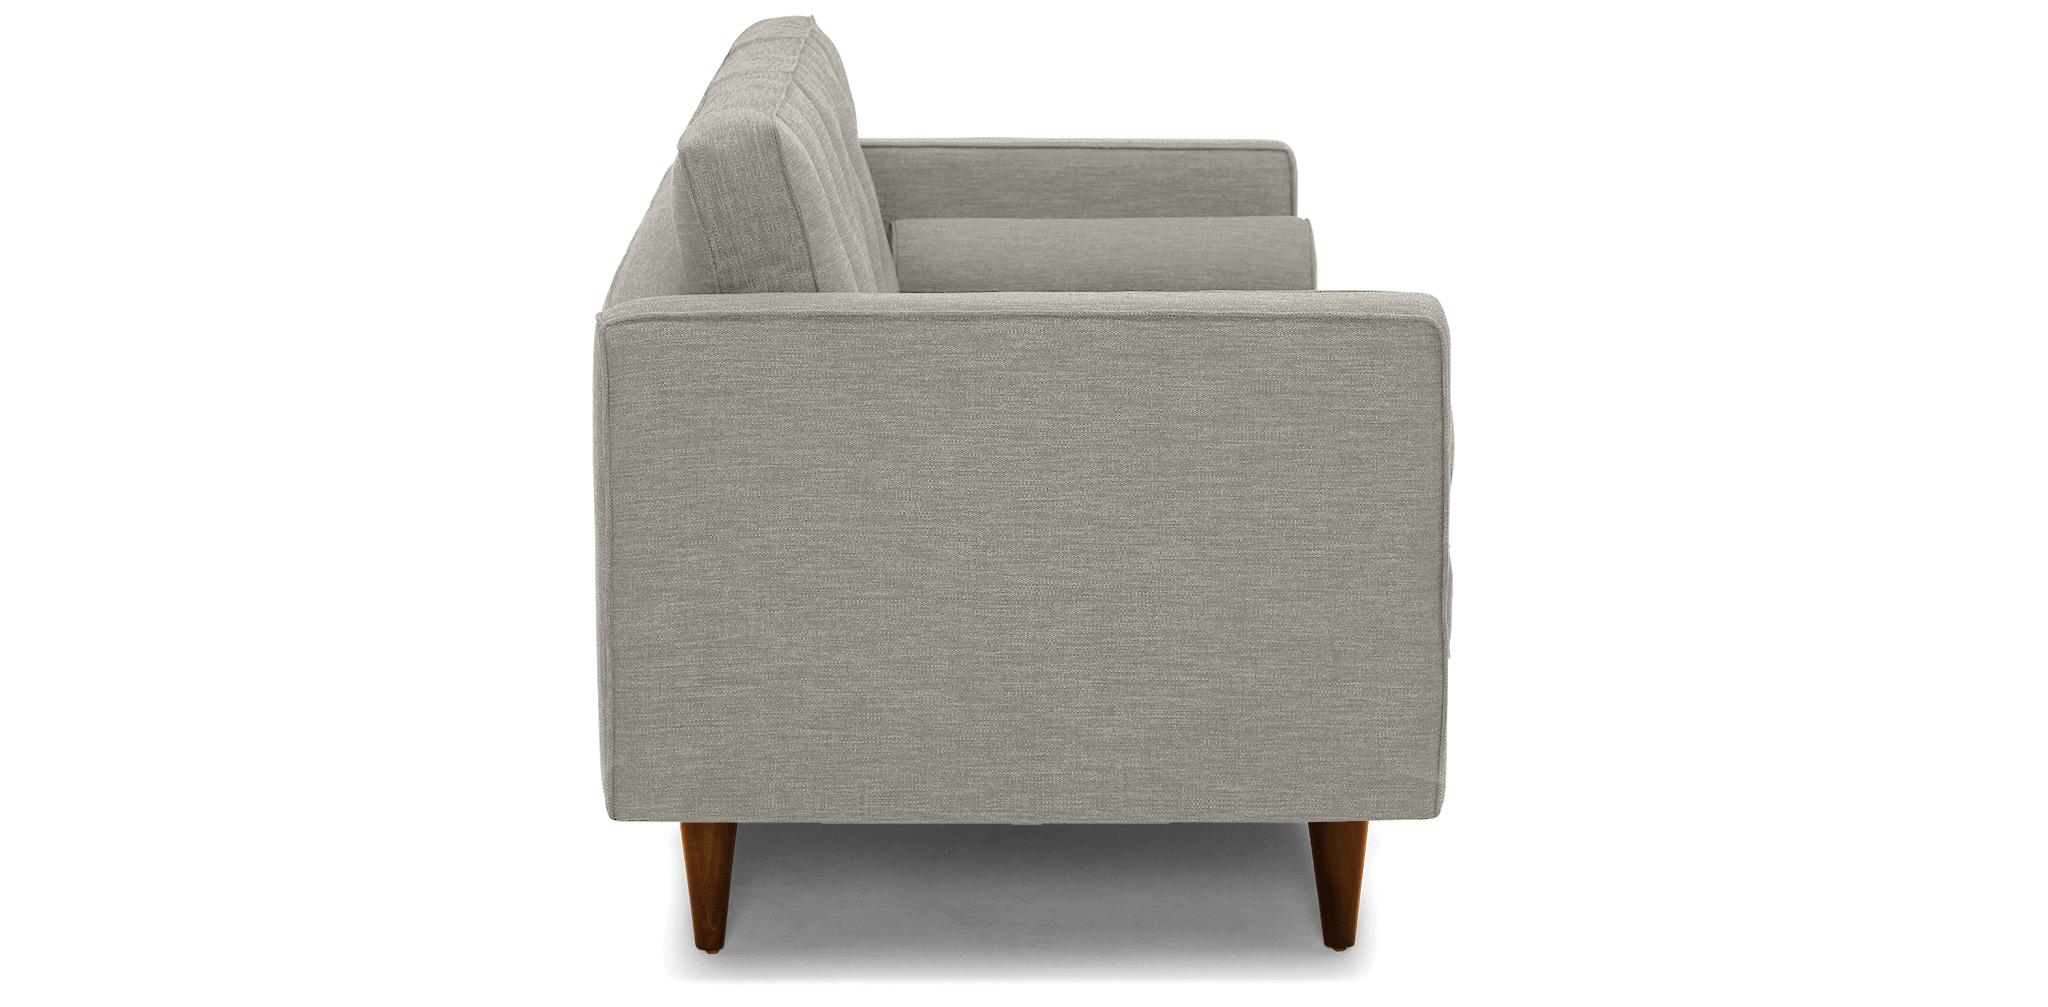 White Braxton Mid Century Modern Sofa - Bloke Cotton - Mocha - Image 2